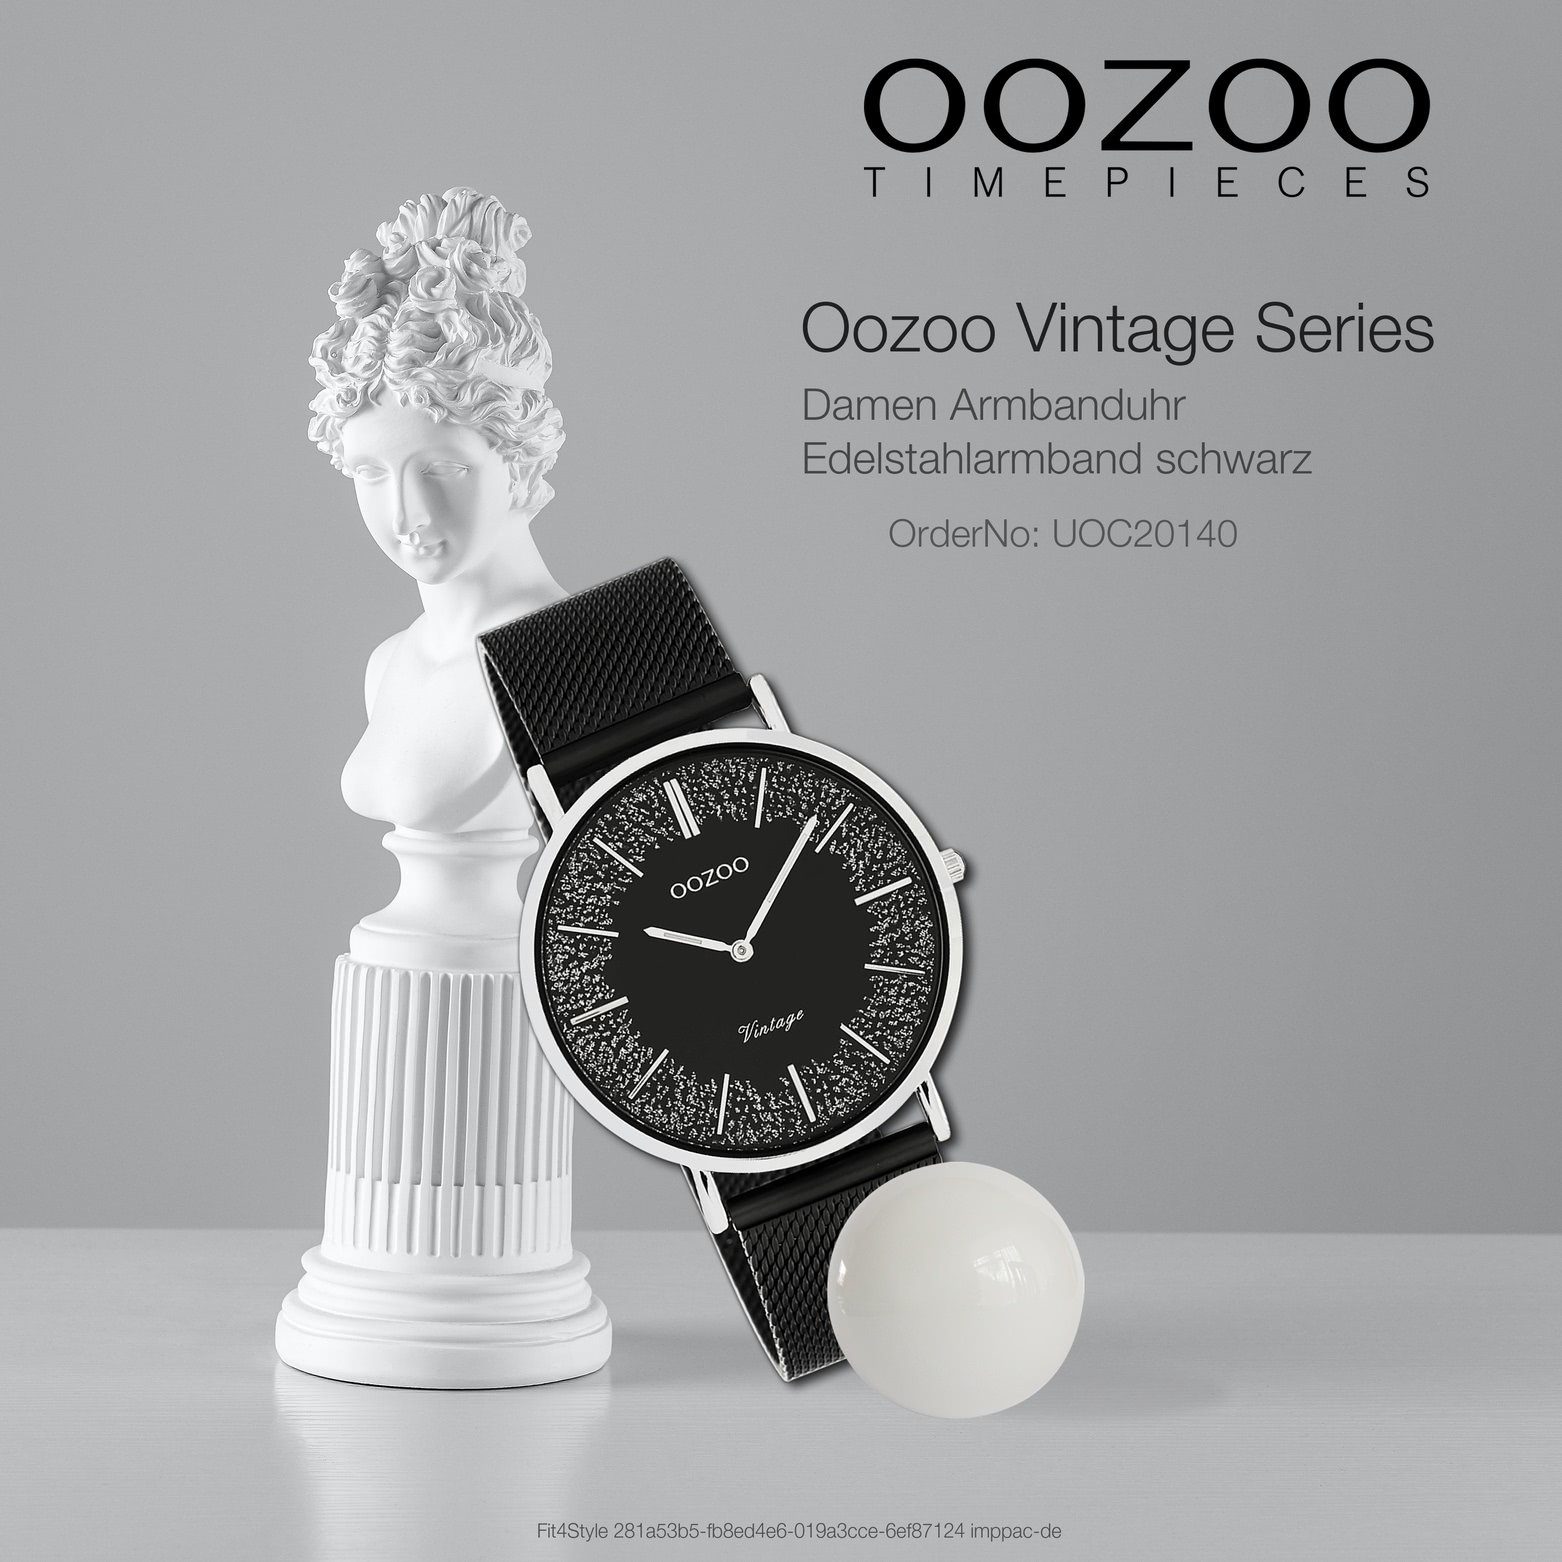 40mm) Armbanduhr Damen groß schwarz Analog, Oozoo (ca. Casual-Style Edelstahlarmband, OOZOO rund, Quarzuhr Damenuhr